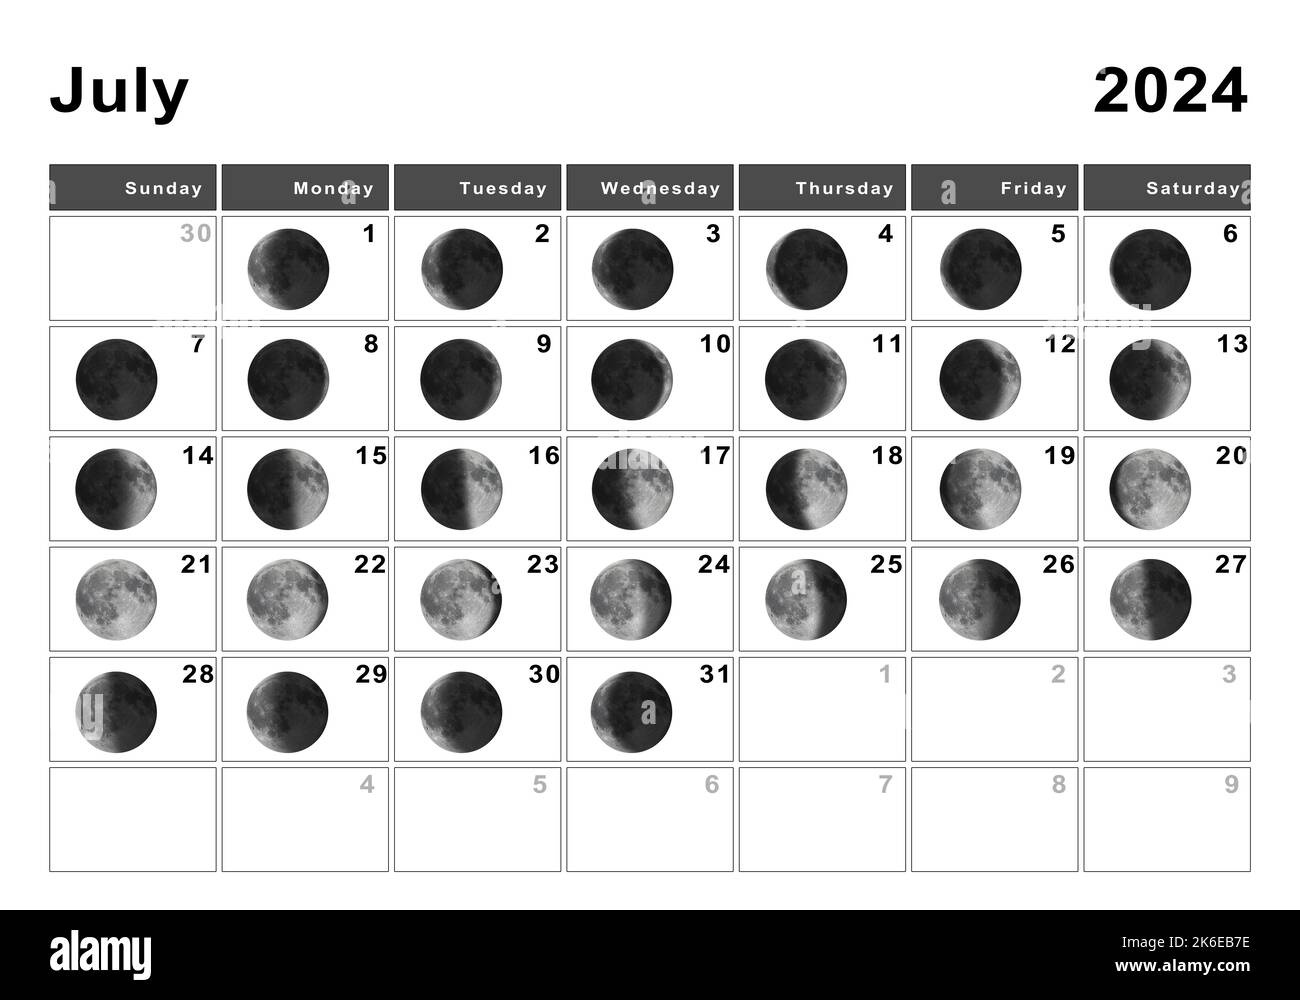 July 2024 Lunar Calendar, Moon Cycles, Moon Phases Stock Photo - Alamy inside July 19 Lunar Calendar 2024